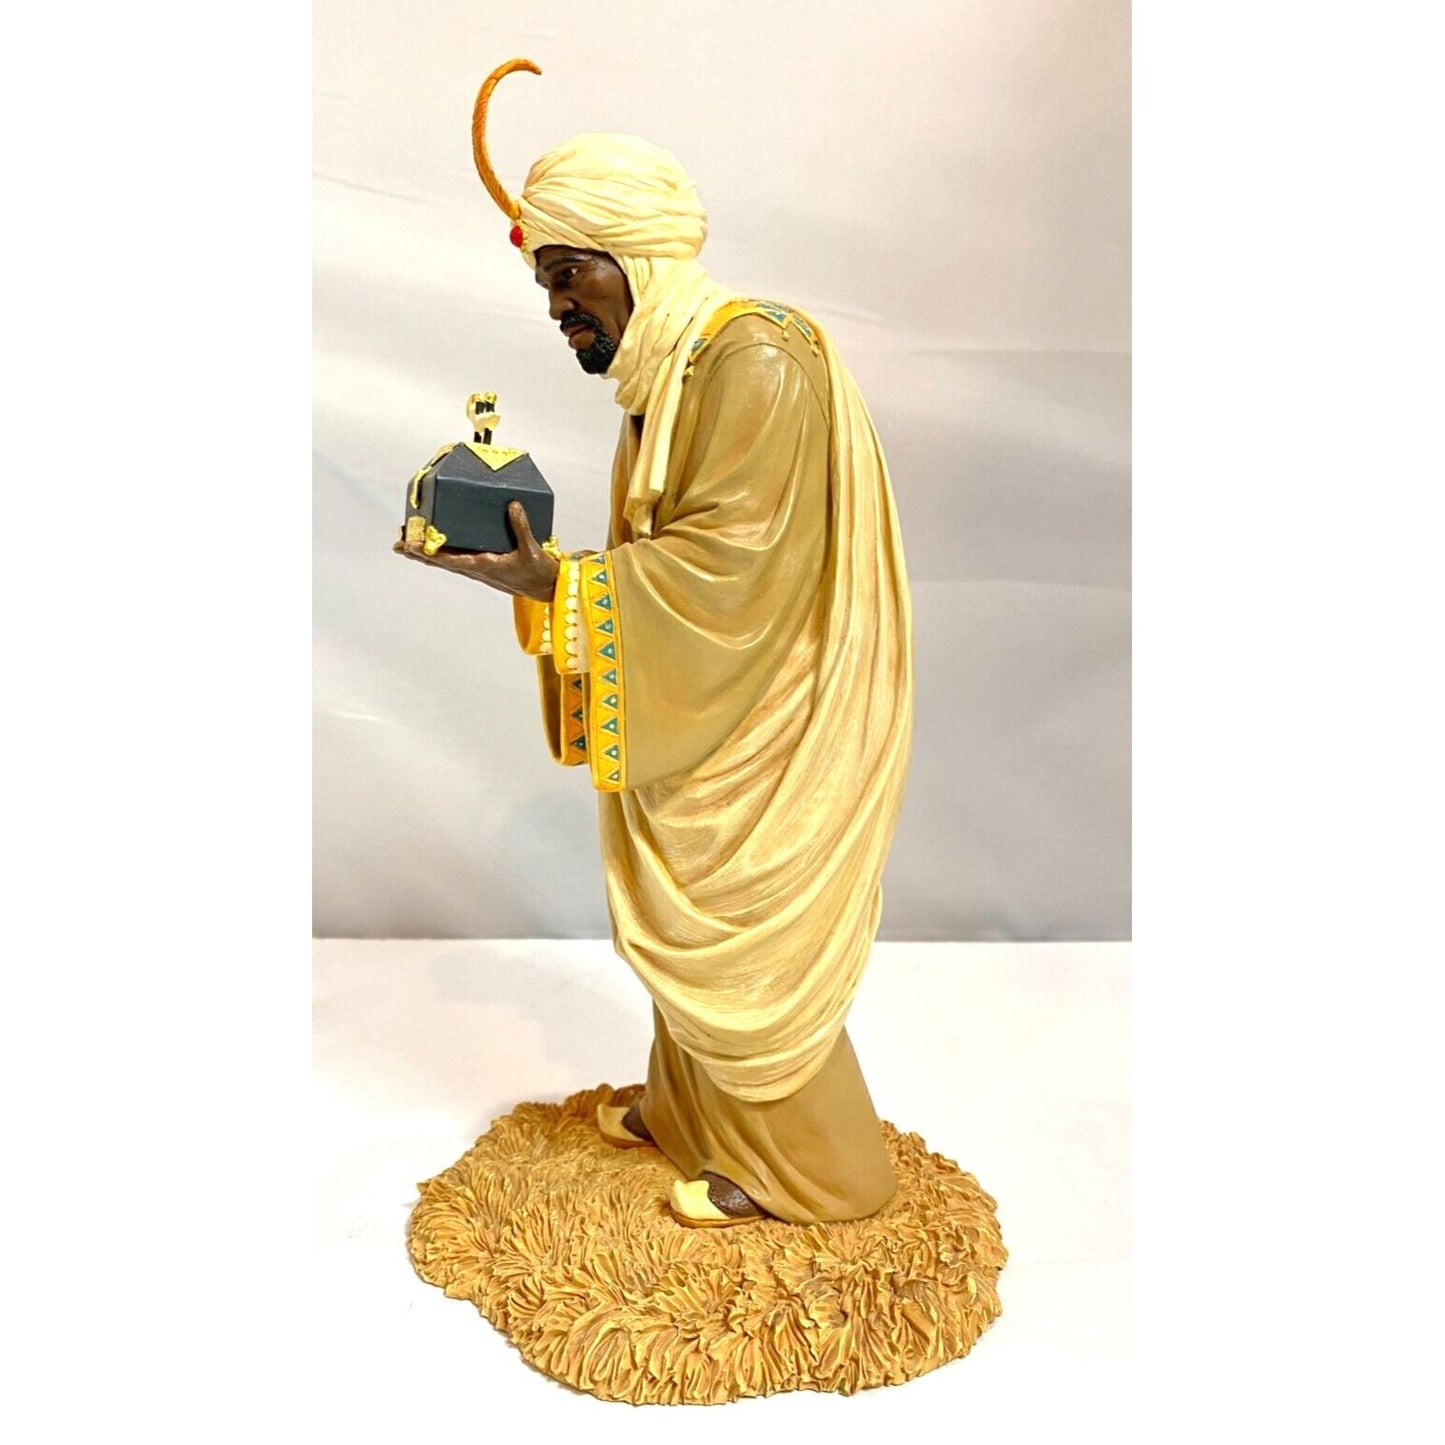 Thomas Blackshear Ebony Visions The Wise Man With Gold LE #100 - Signed